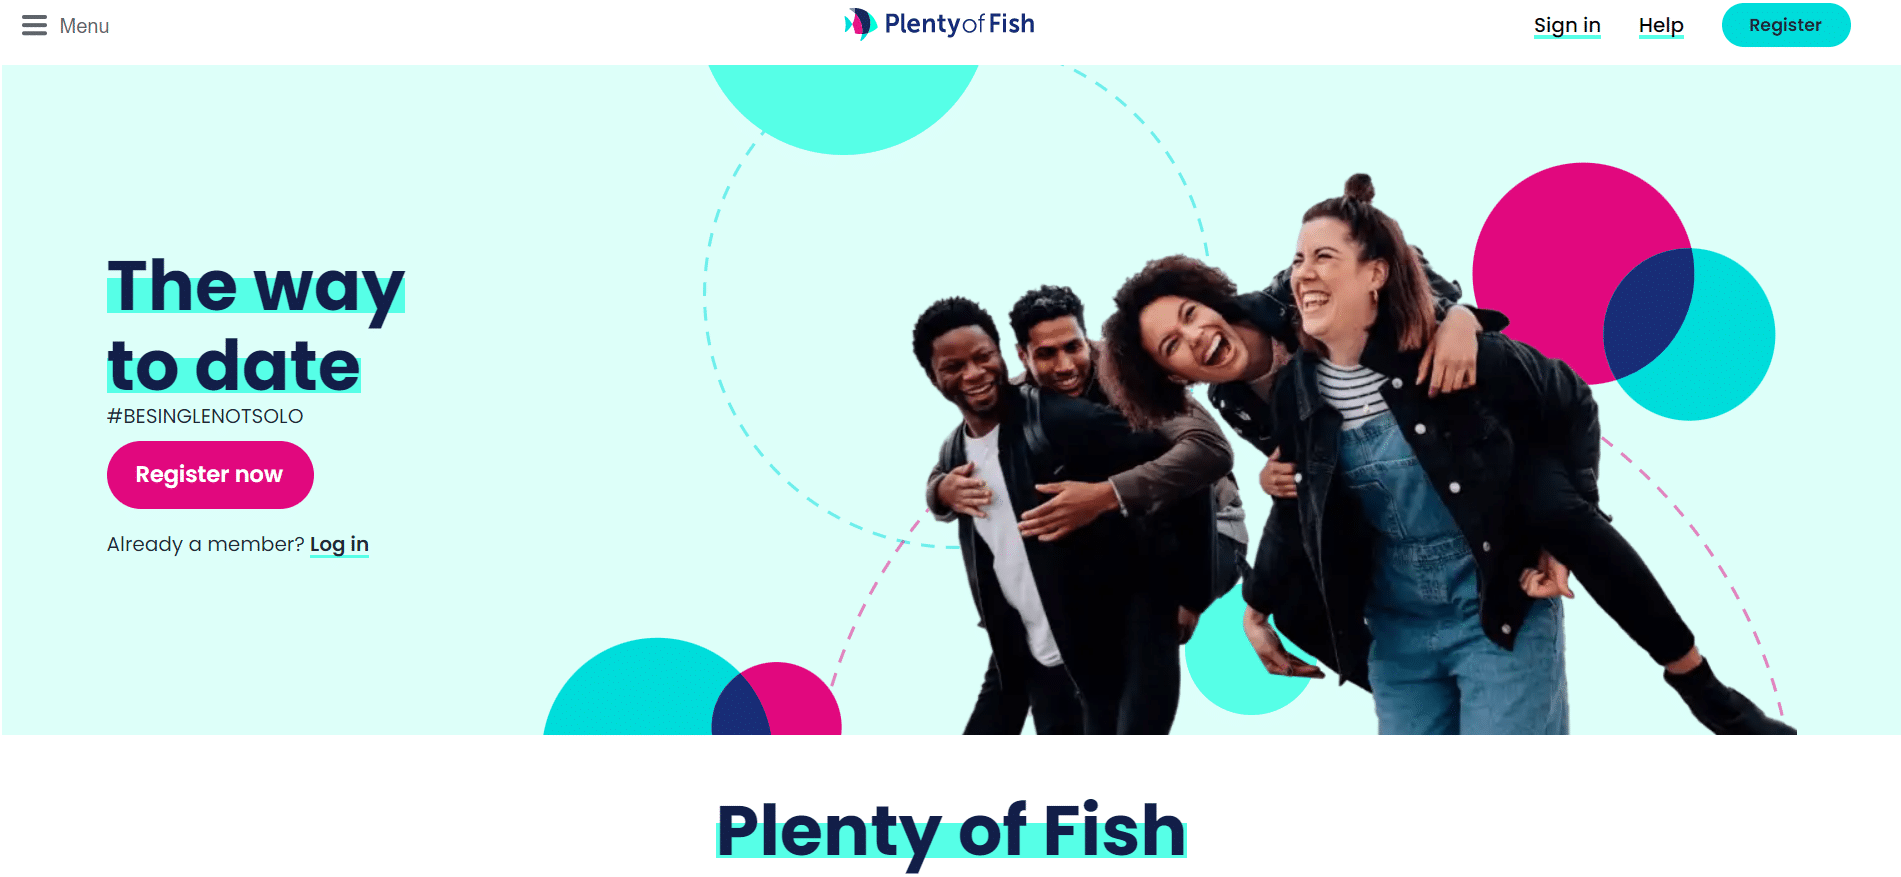 Plenty of Fish homepage